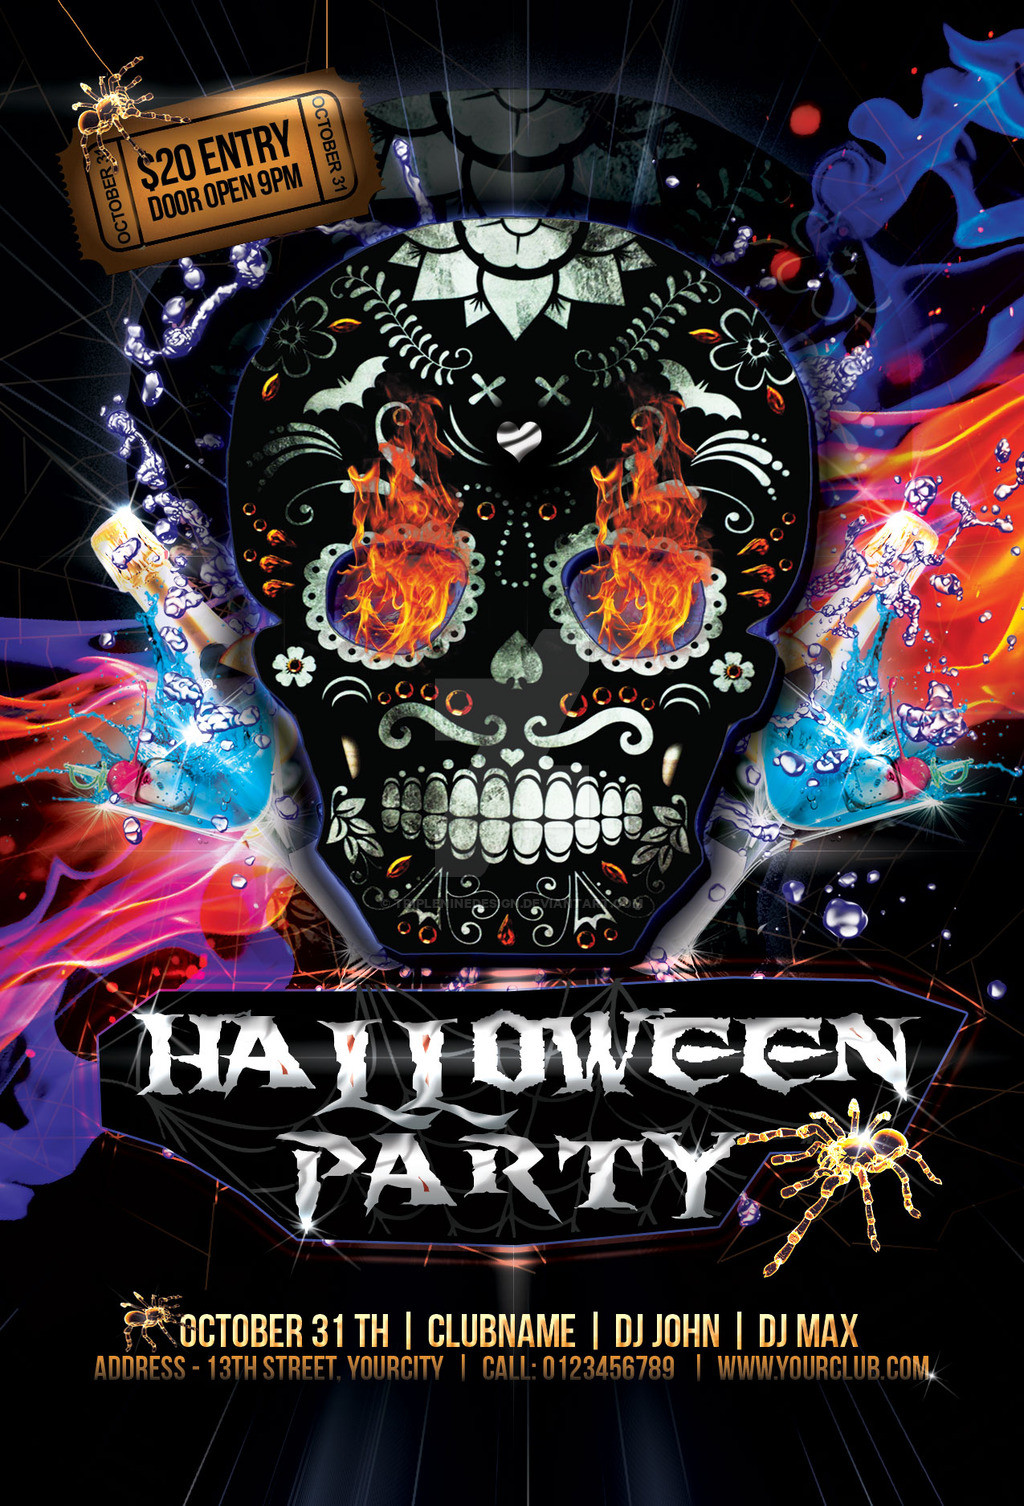 Halloween Party Flyer Ideas
 Halloween Party Flyer by tripleninedesign on DeviantArt